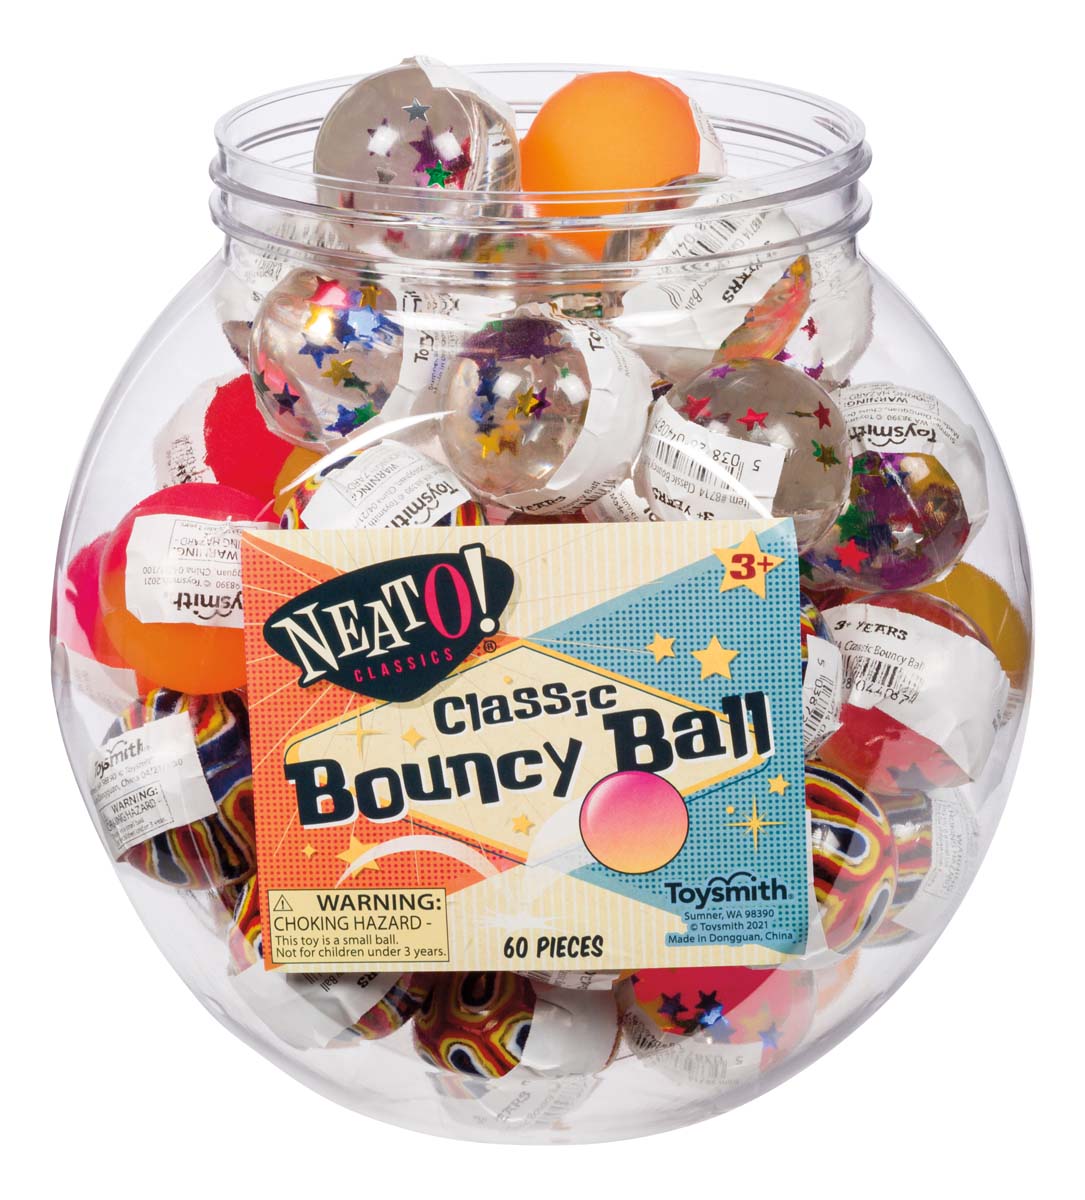 Neato! Classic Bouncy Ball